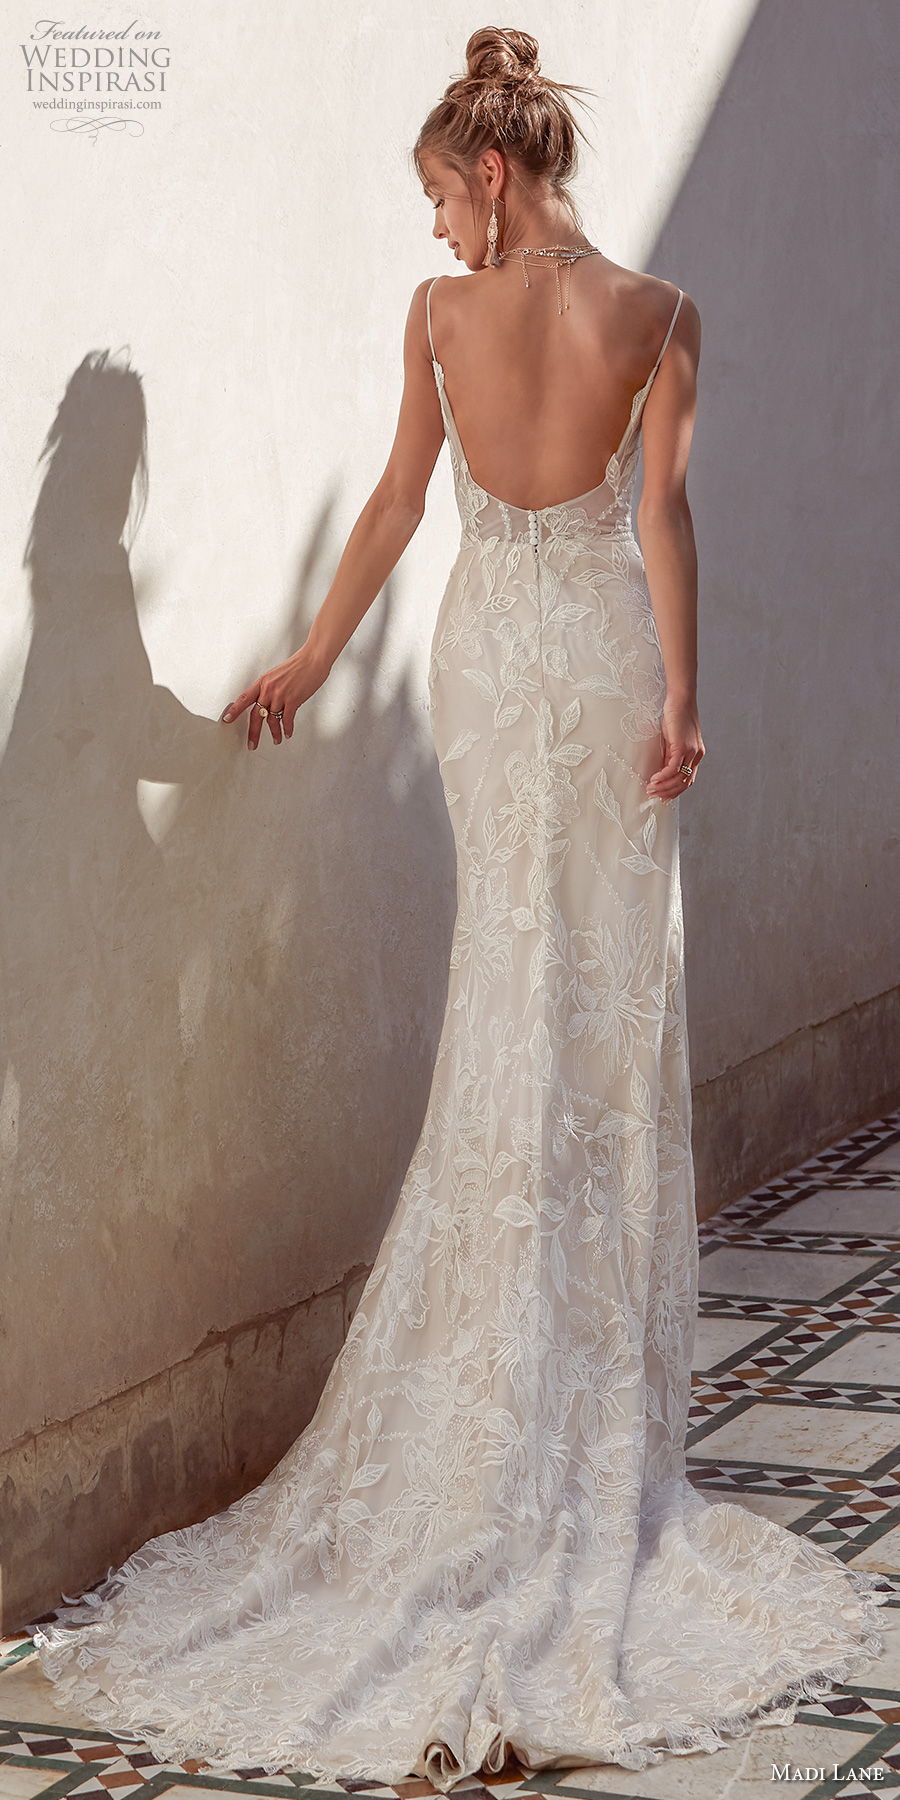 Madi Lane Bridal Fall 2020 Wedding Dresses — “Marrakech” Collection ...